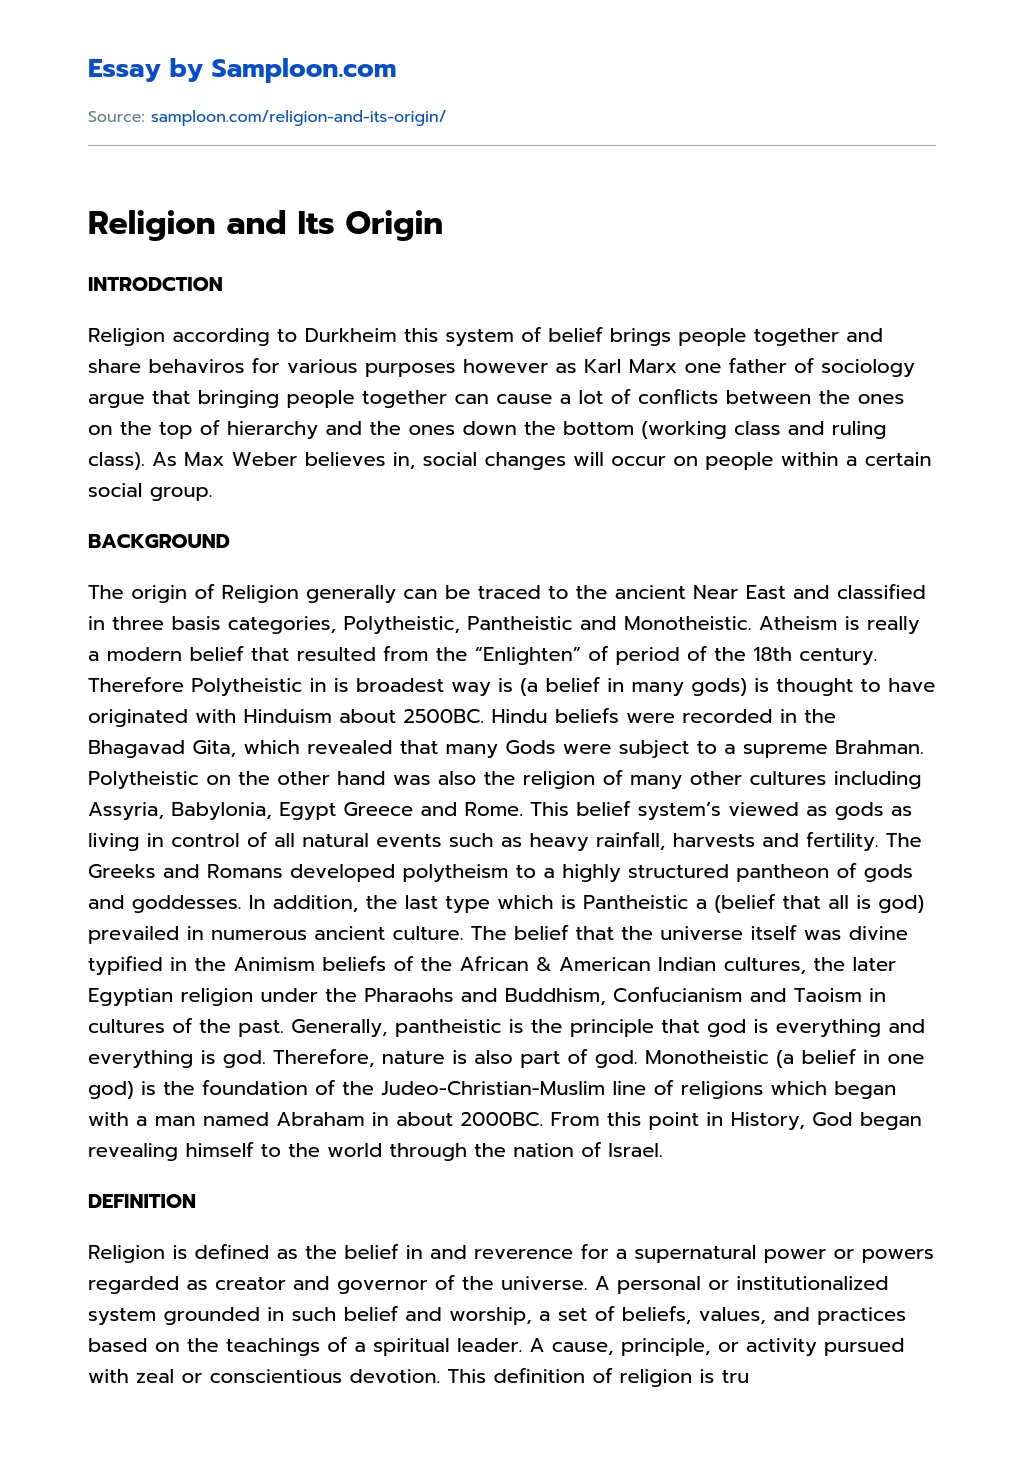 Religion and Its Origin essay